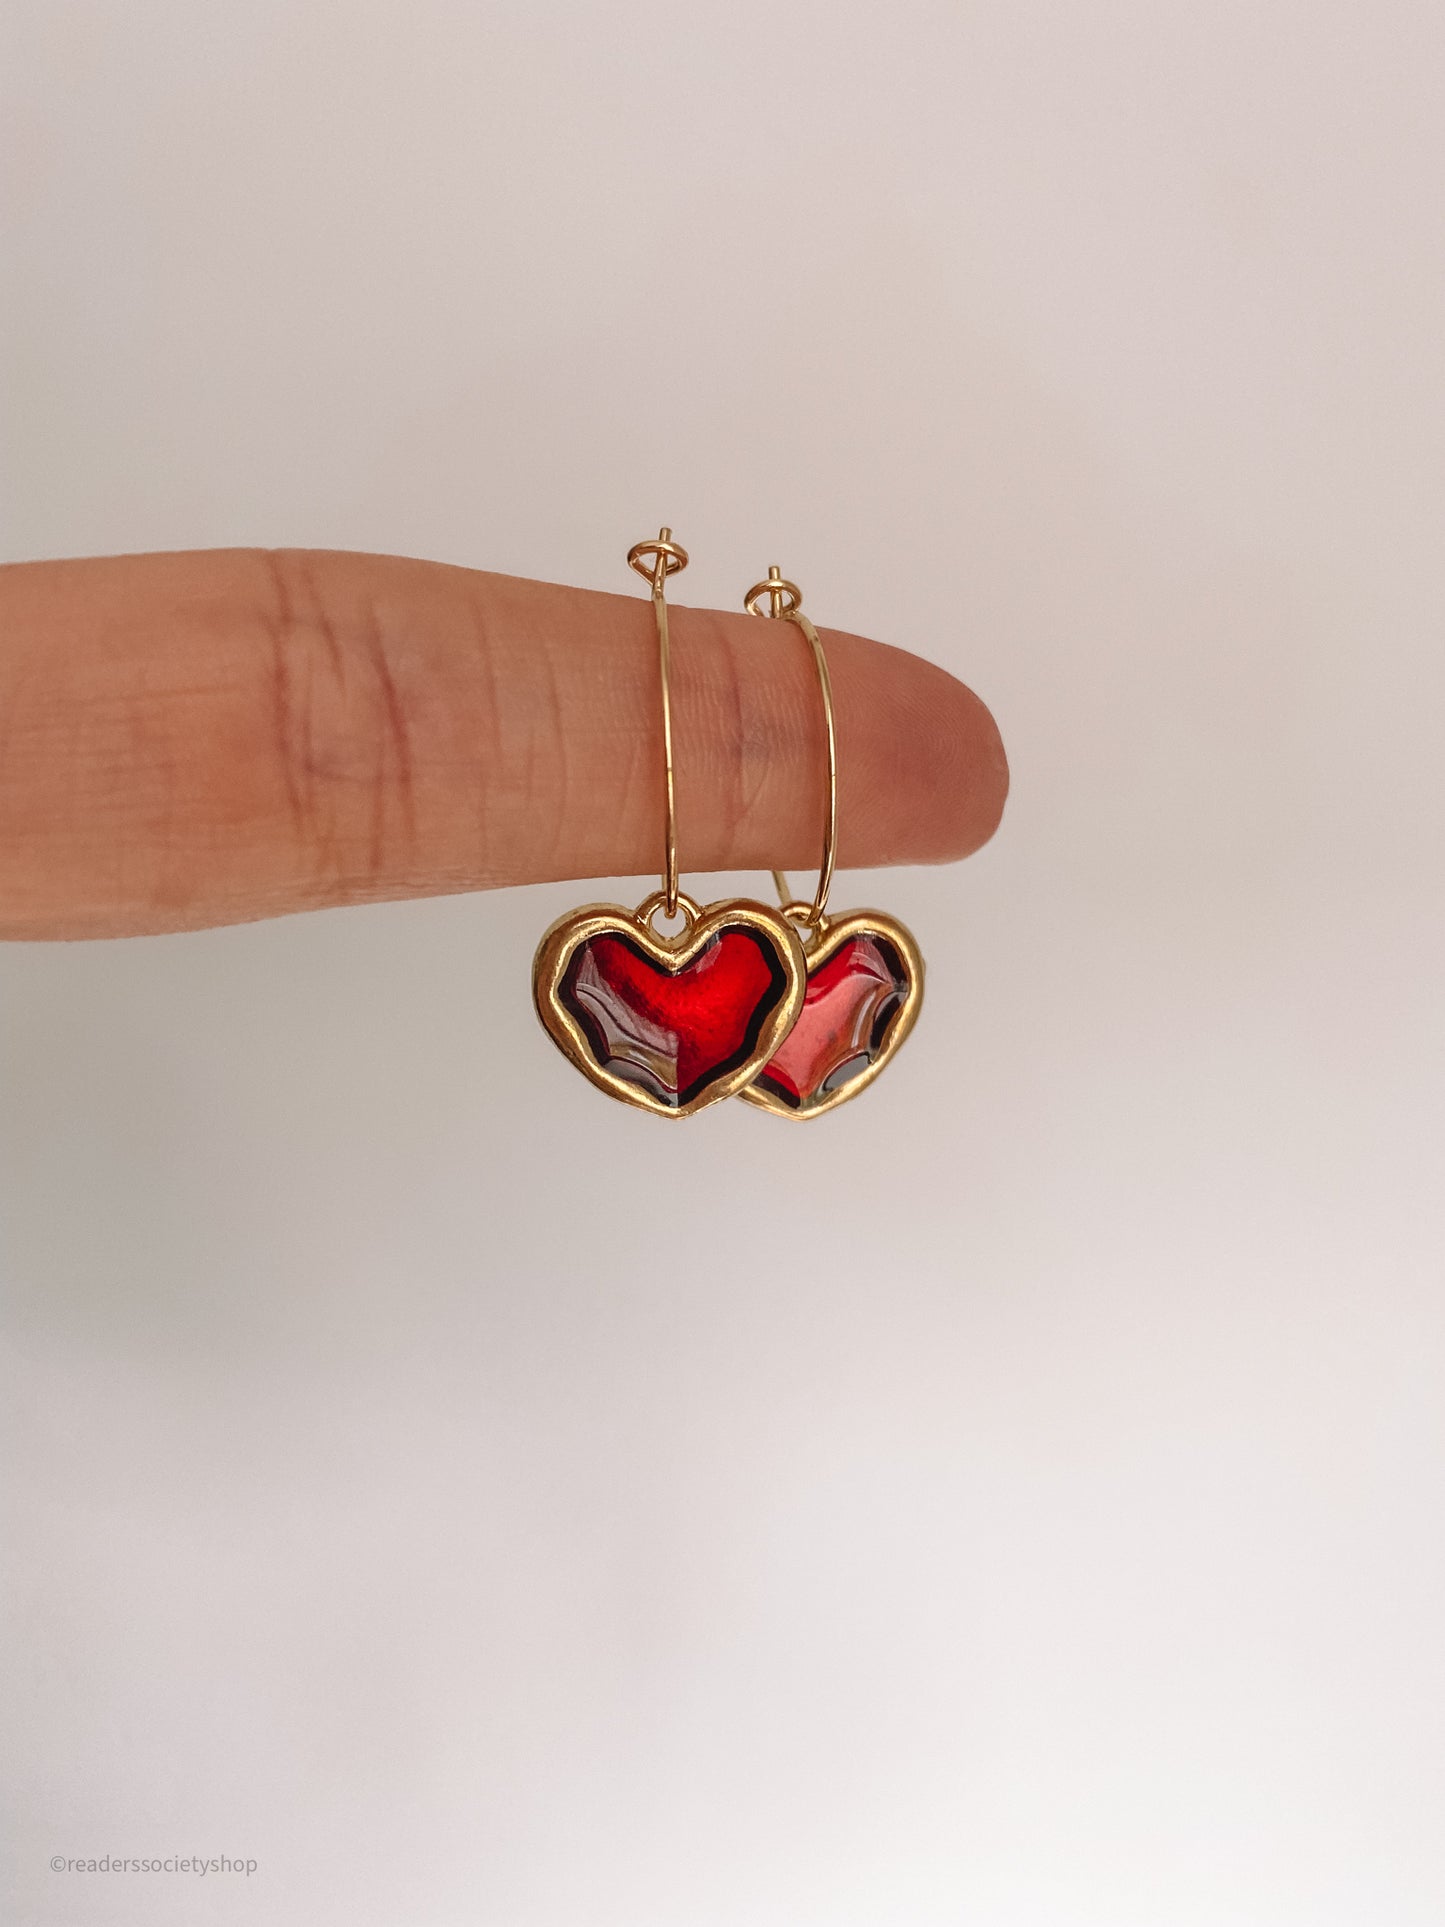 Prince of Hearts Earrings